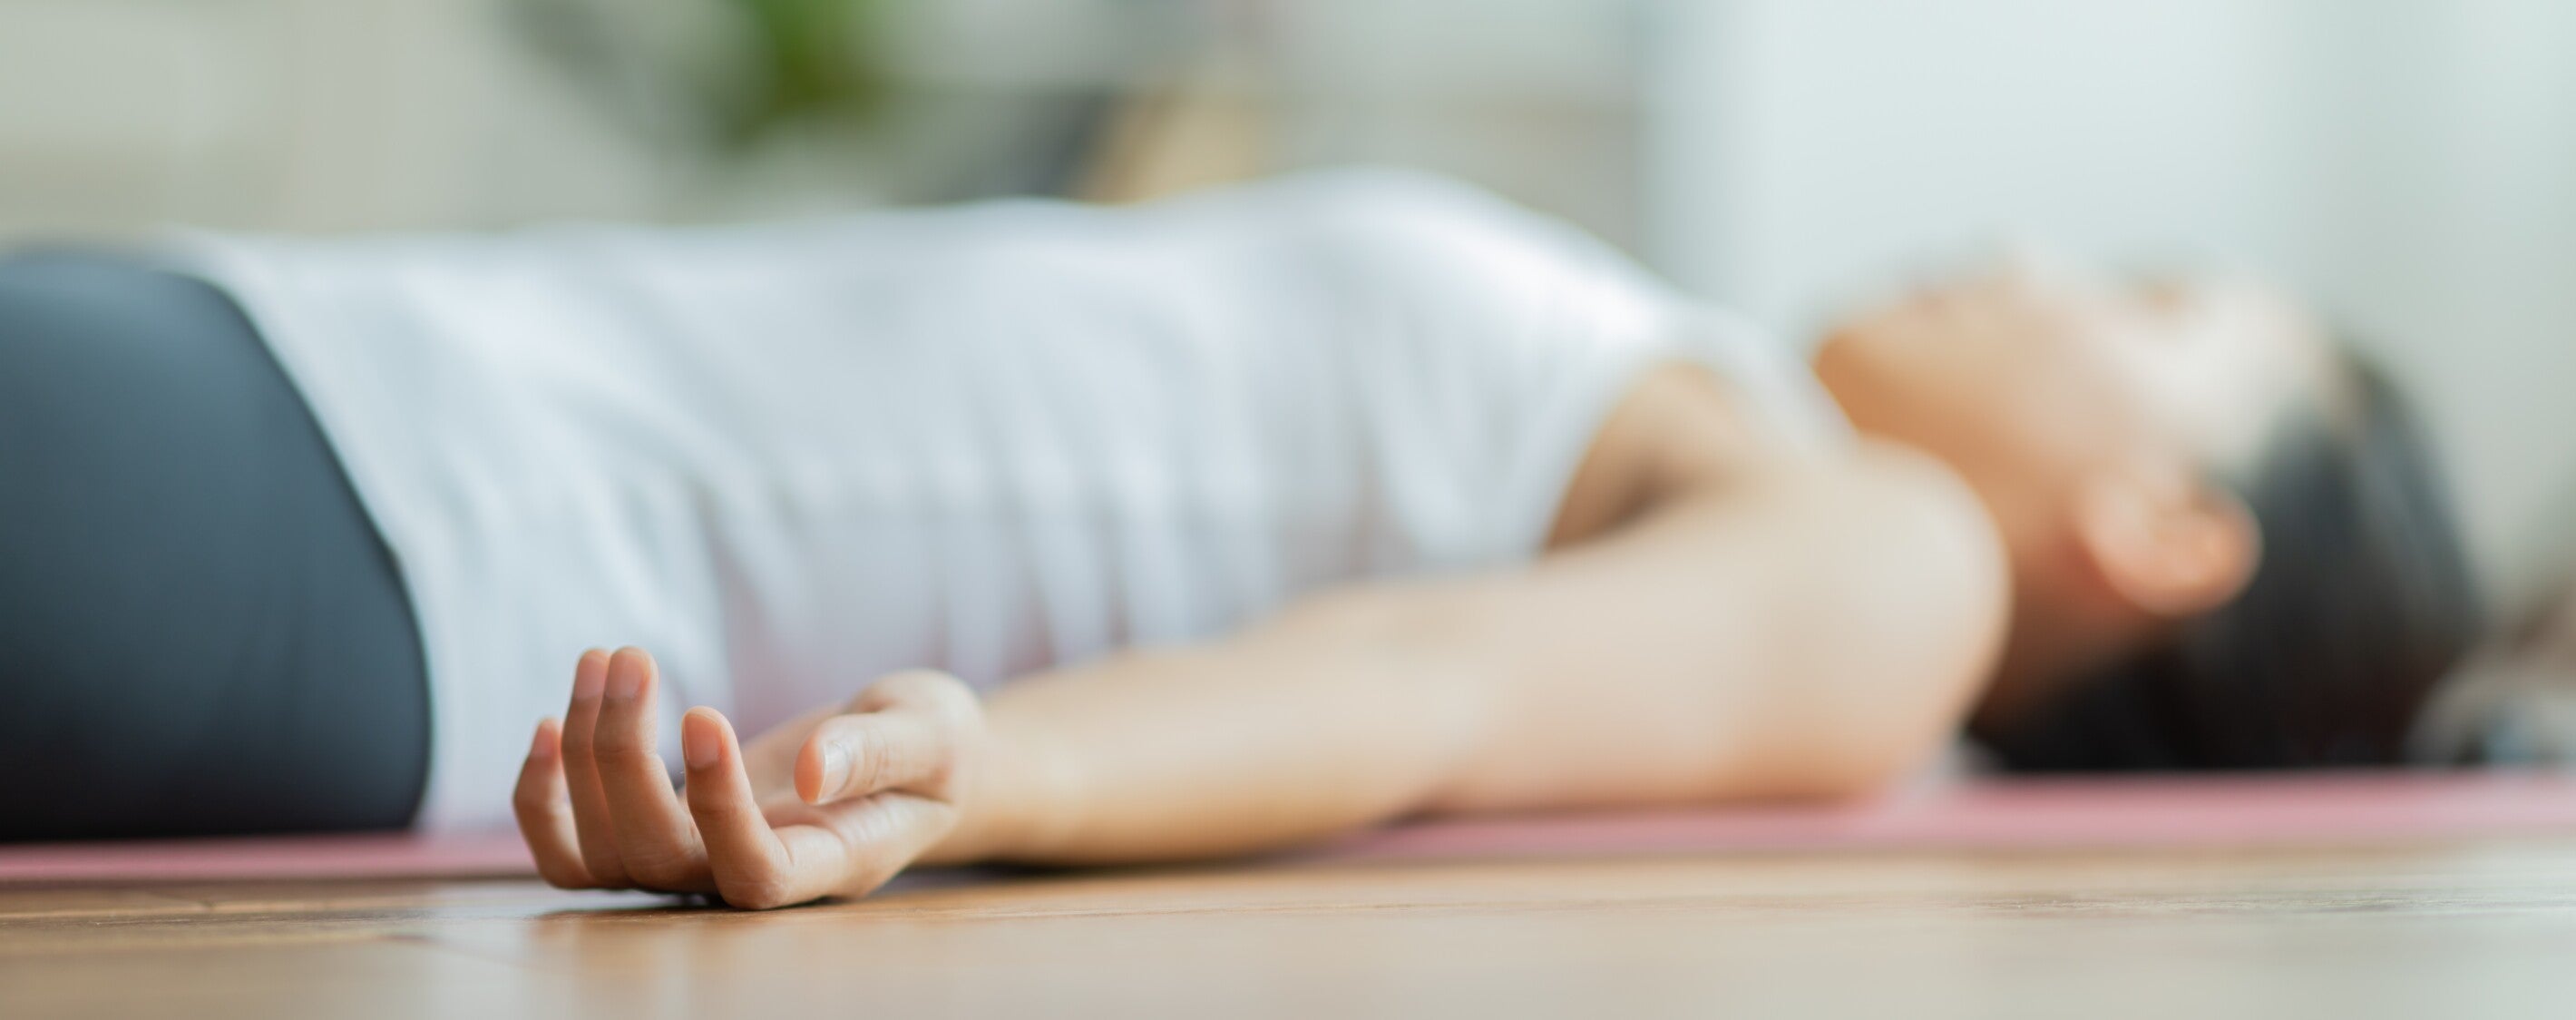 Yoga Asana - How to Do Savasana (Corpse Pose) and its Benefits - Improves  Blood Circulation - YouTube